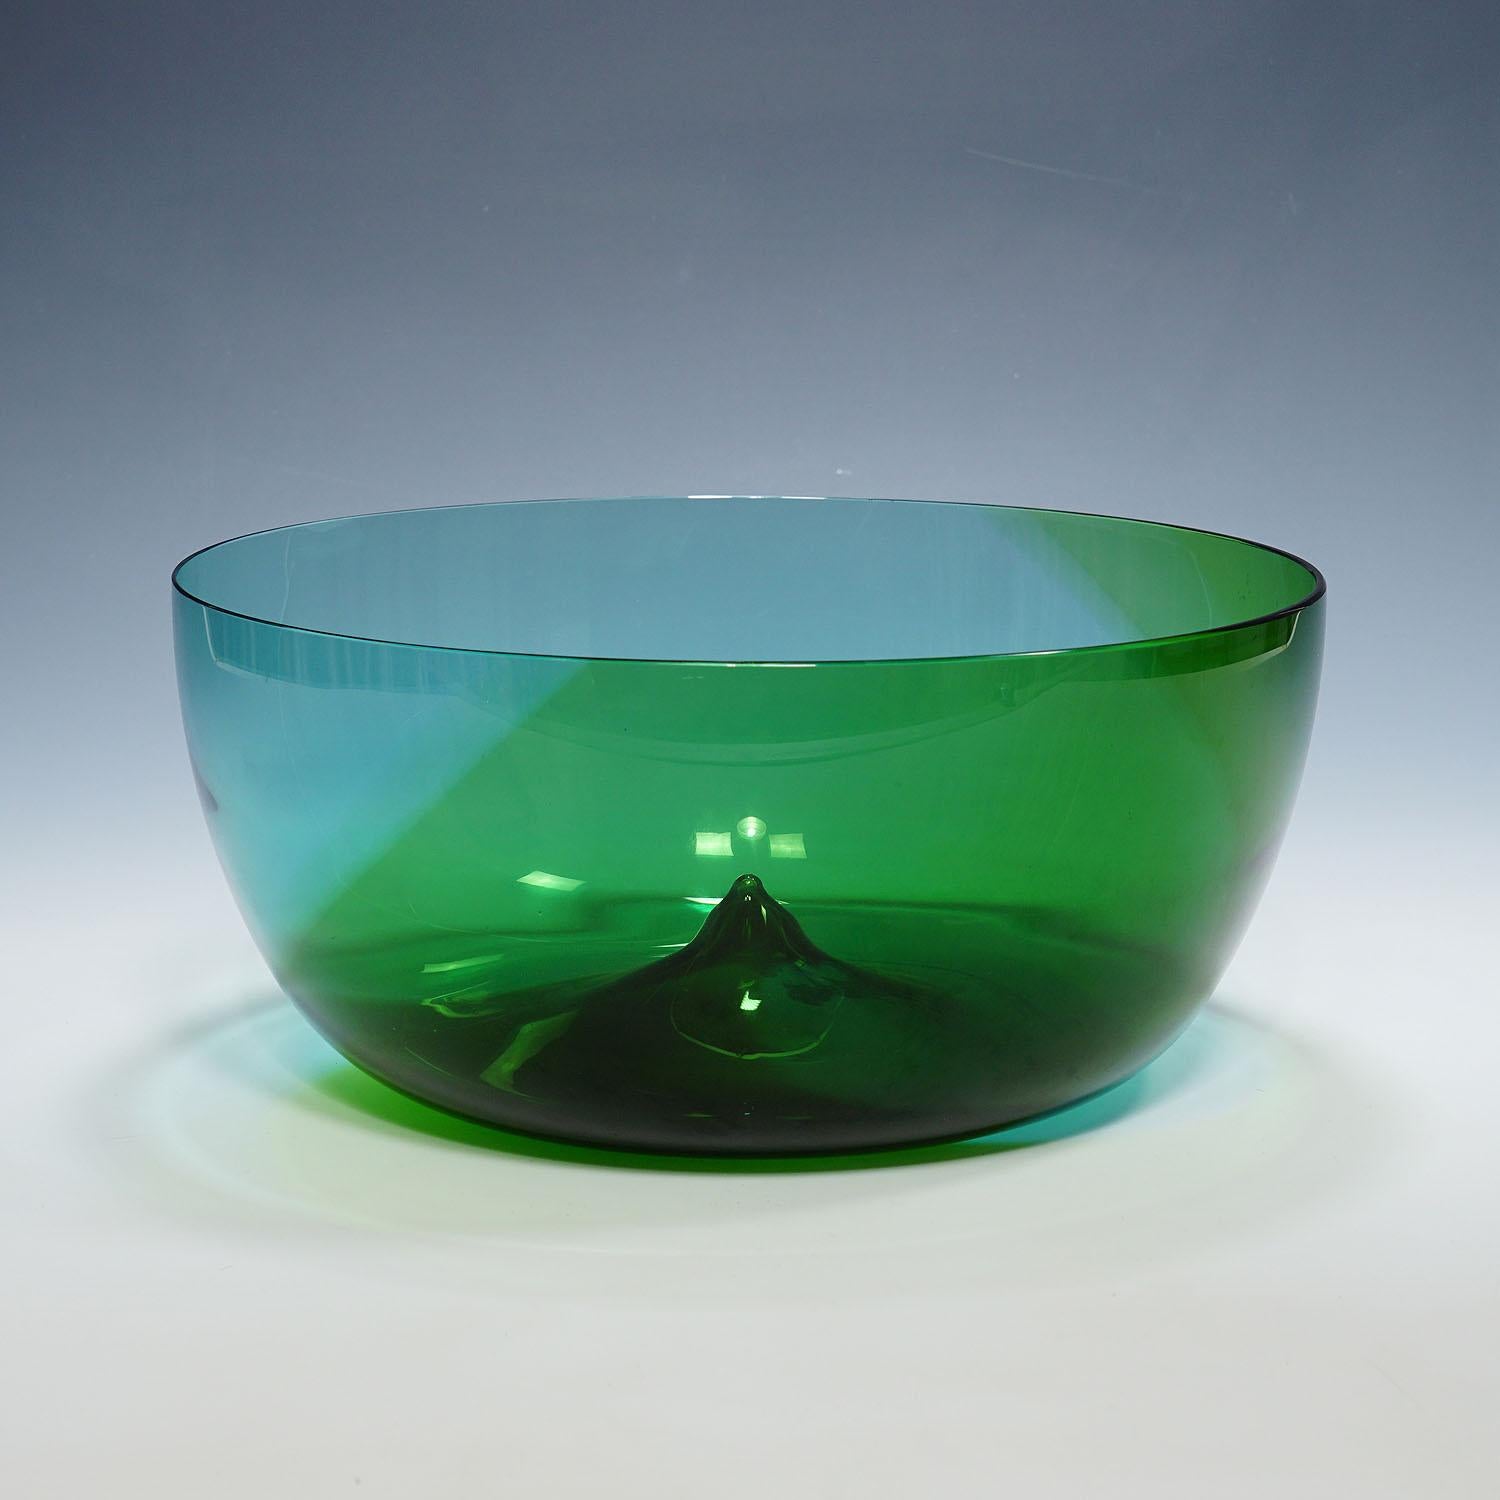 Large Venini Bowl 'Coreano', Designed by Tapio Wirkkala in 1966

A blue and green a fasce a spirale bowl from the Coreani series. Designed in 1966 by Tapio Wirkkala for Venini. Produced 1973 by Venini, Murano. Incised signature 